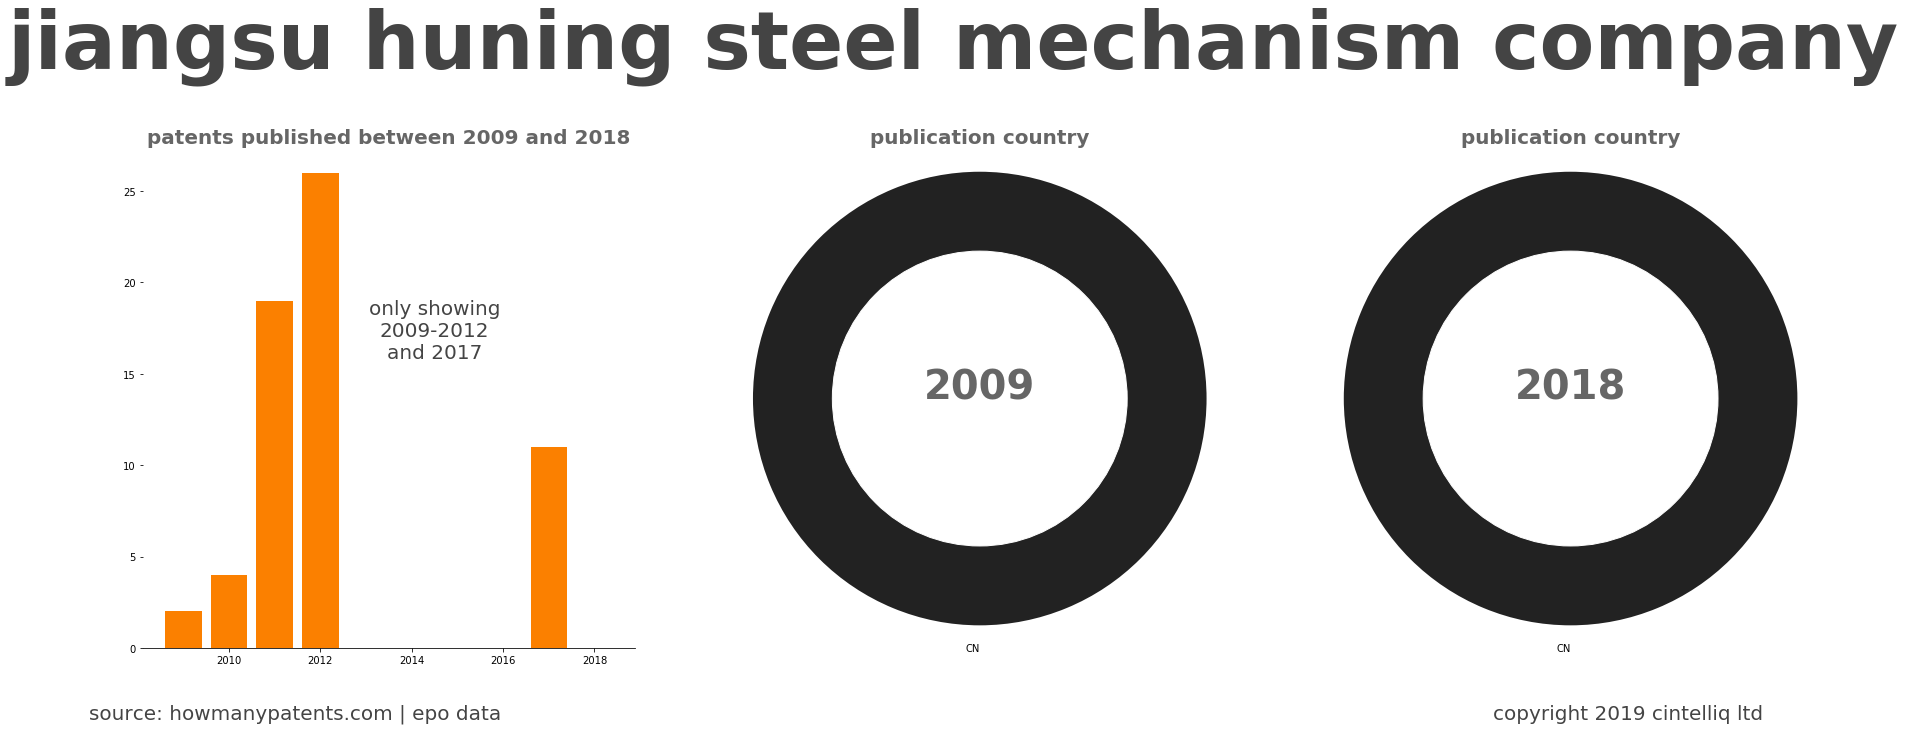 summary of patents for Jiangsu Huning Steel Mechanism Company